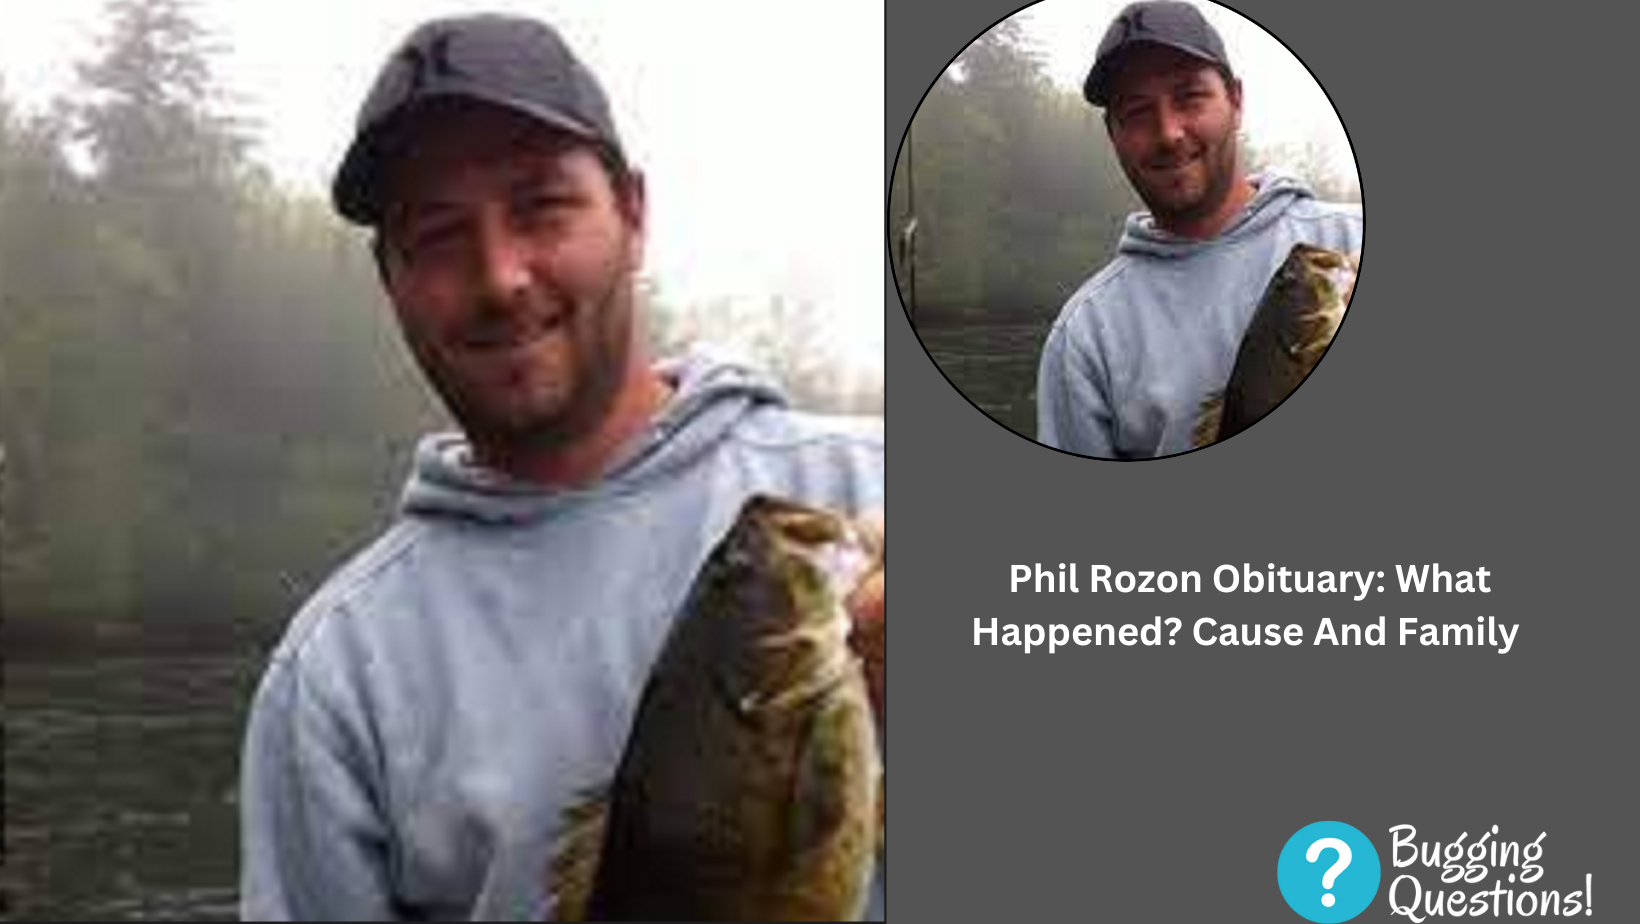 Phil Rozon Obituary: What Happened?